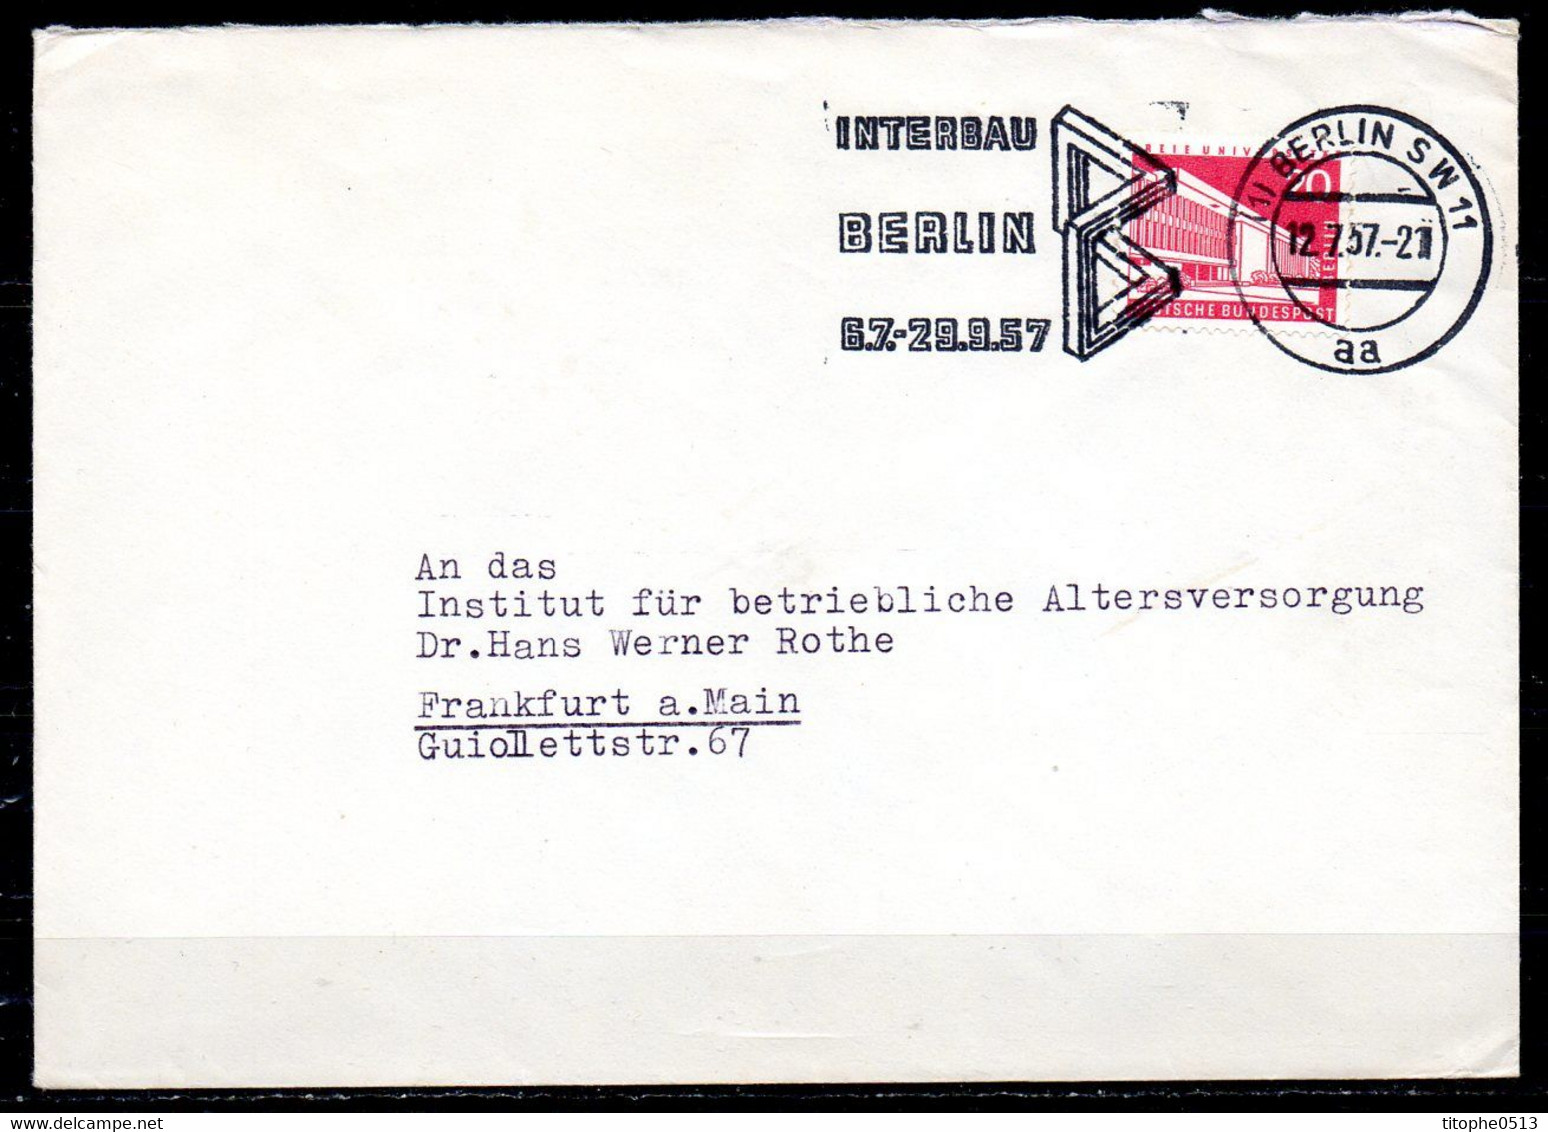 ALLEMAGNE - BERLIN. Flamme De 1957 Sur Enveloppe. Interbau'57. - Macchine Per Obliterare (EMA)